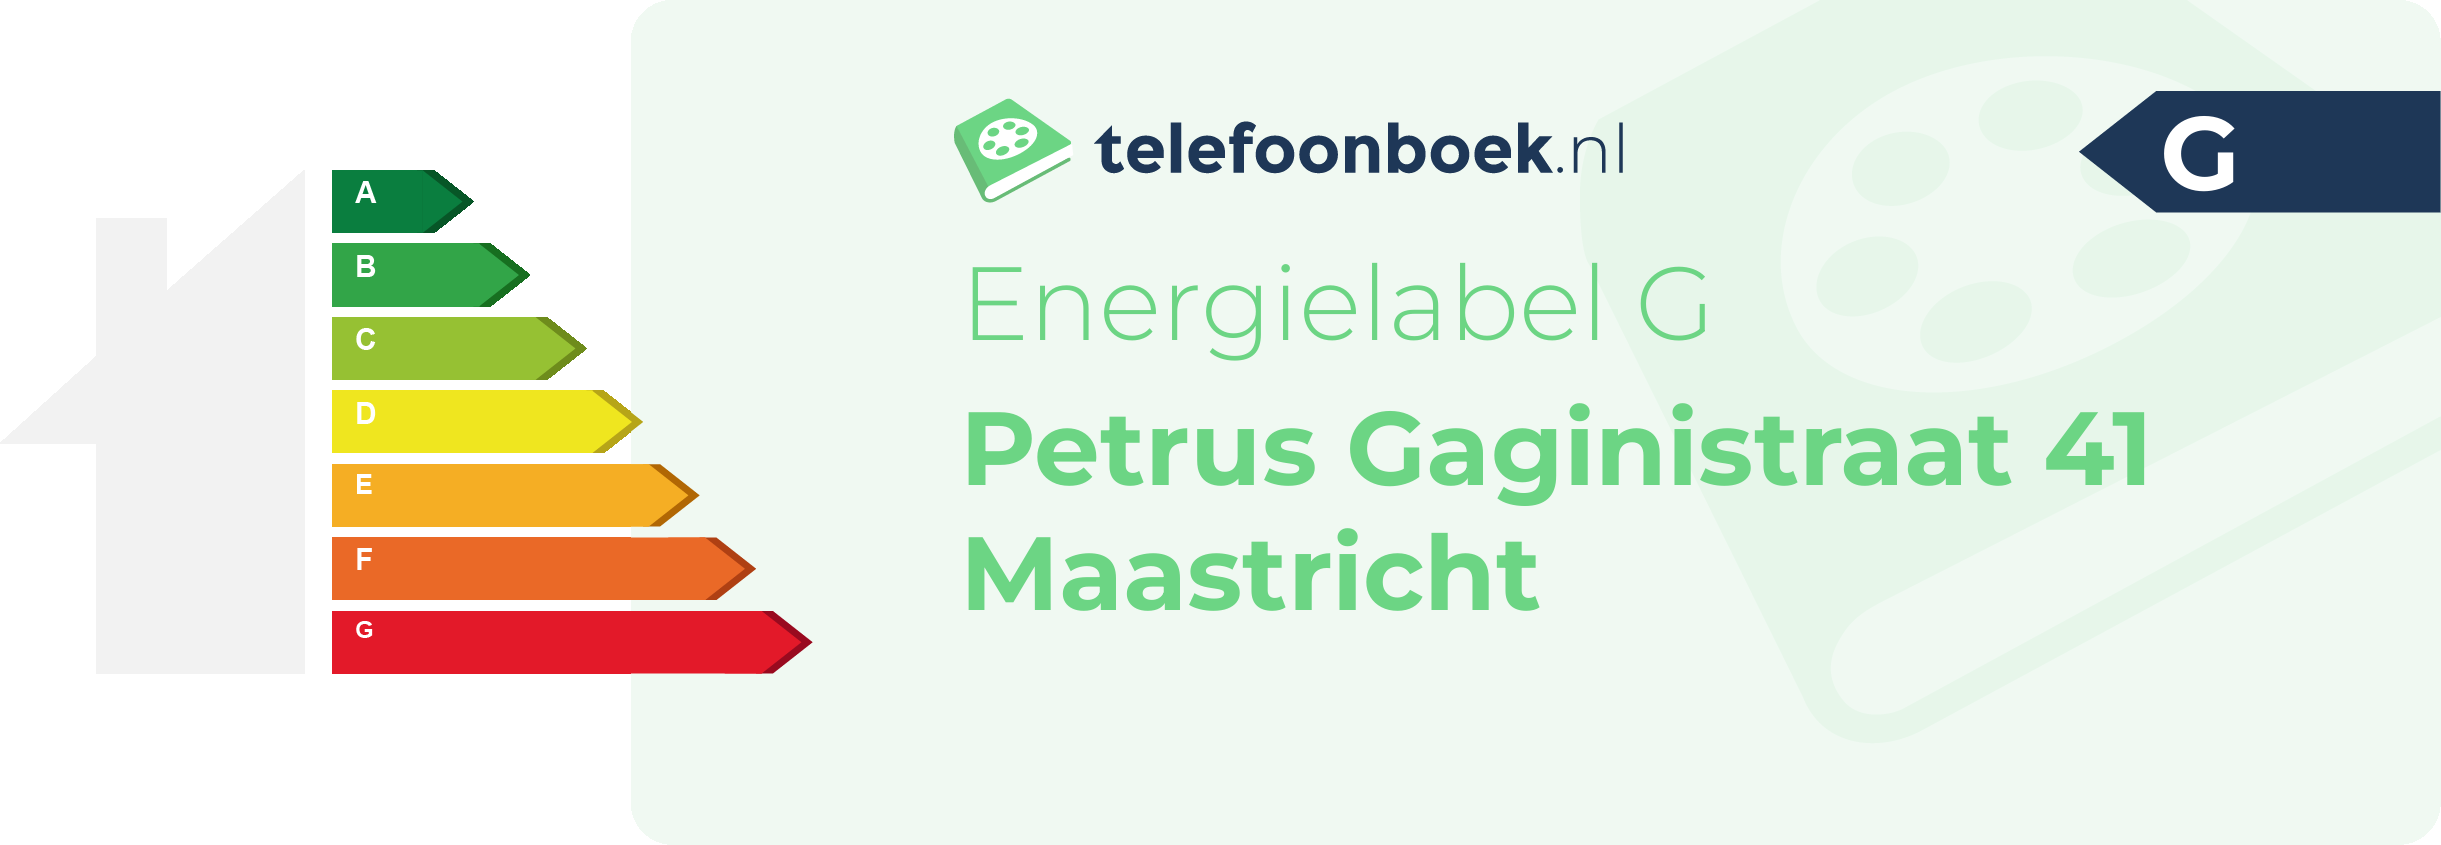 Energielabel Petrus Gaginistraat 41 Maastricht